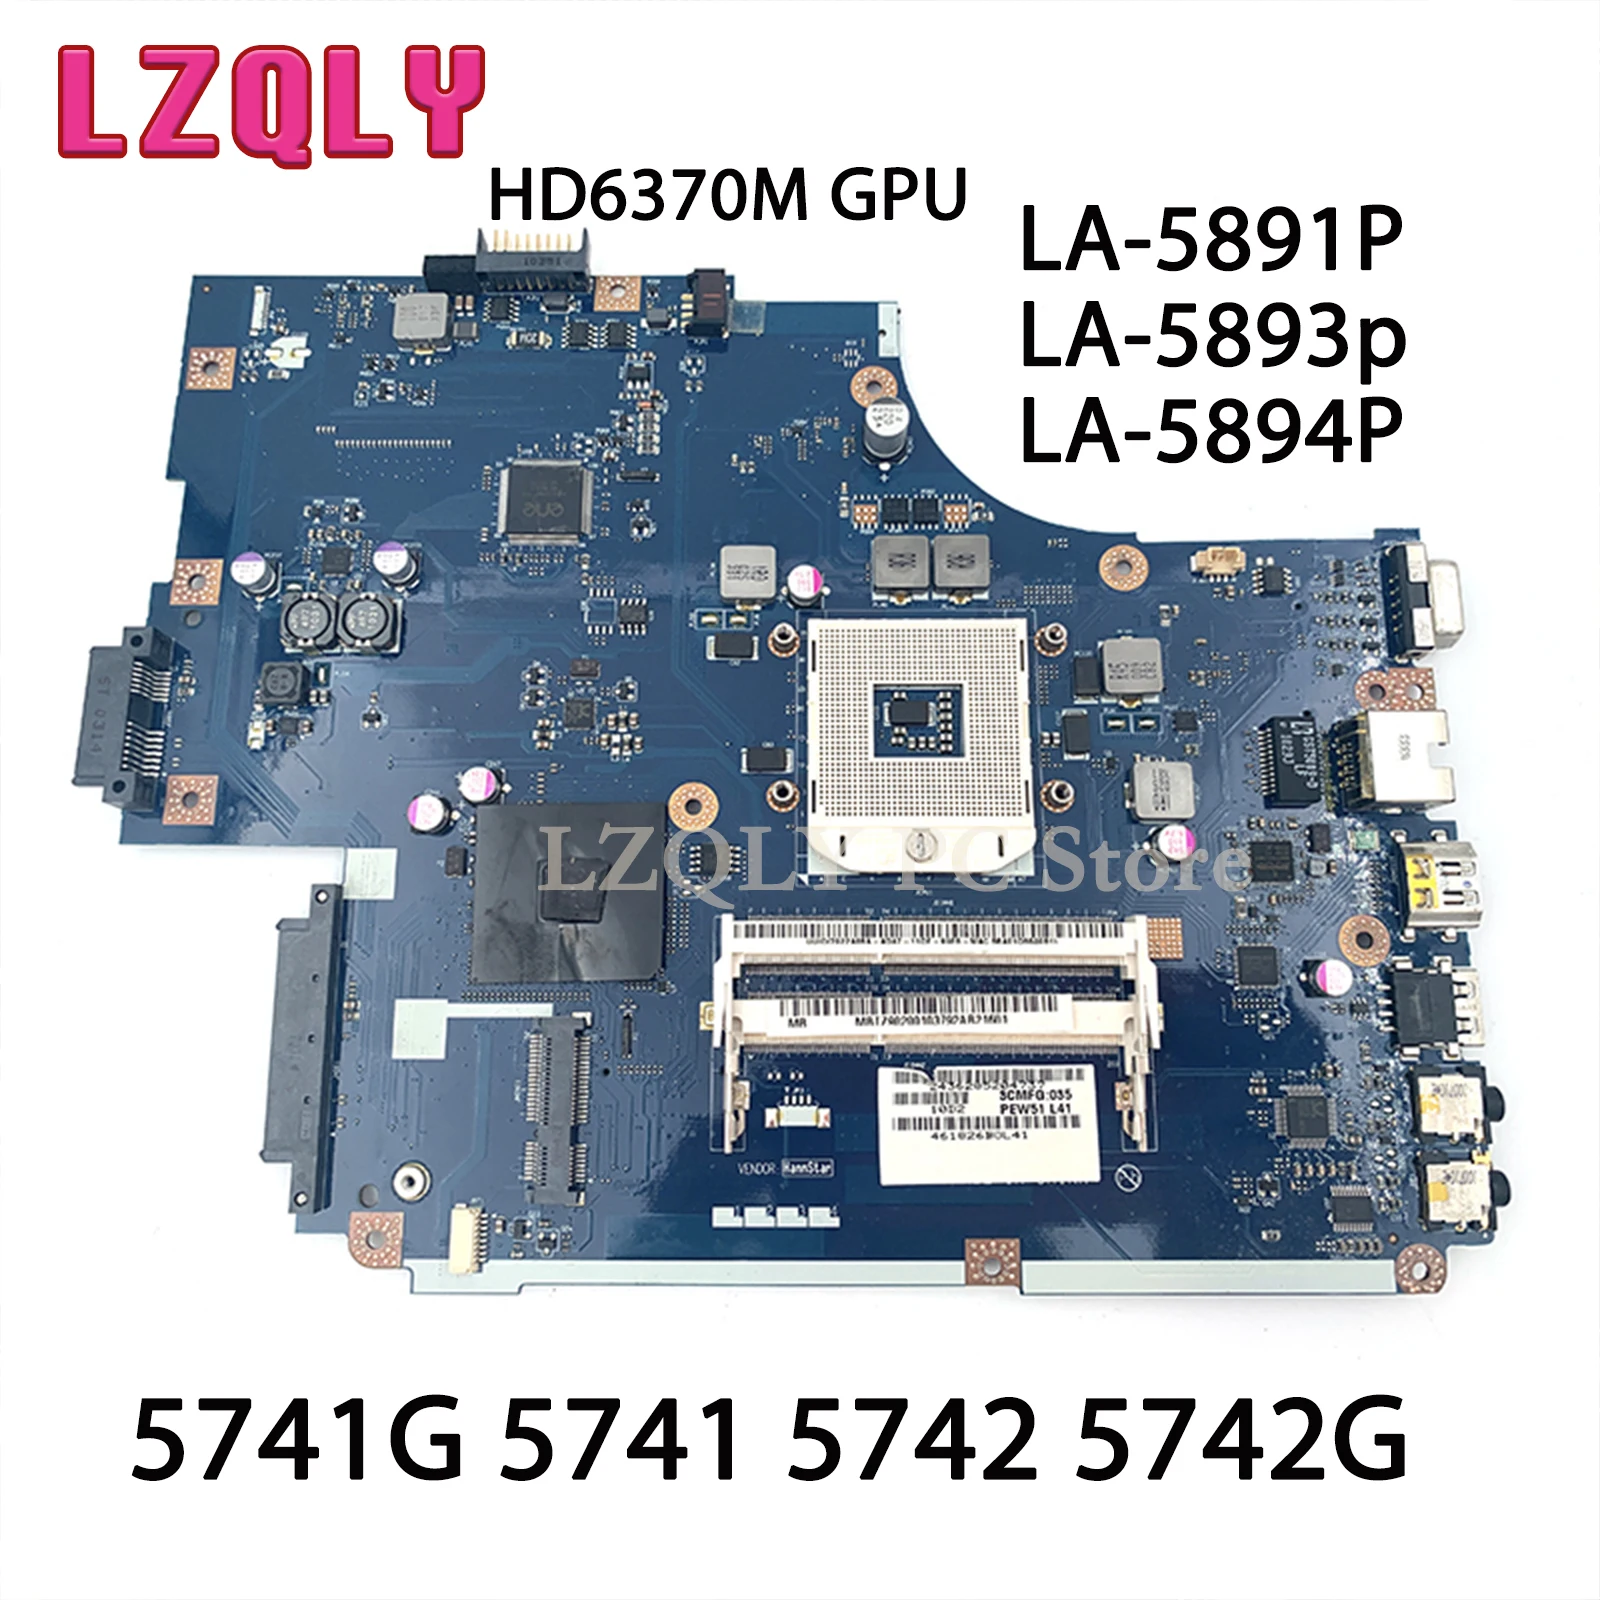 LZQLY NEW70 LA-5892P For Acer aspire 5741G 5741 5742 5742G Motherboard + heatsink cooler fit for LA-5891P LA-5893p LA-5894P